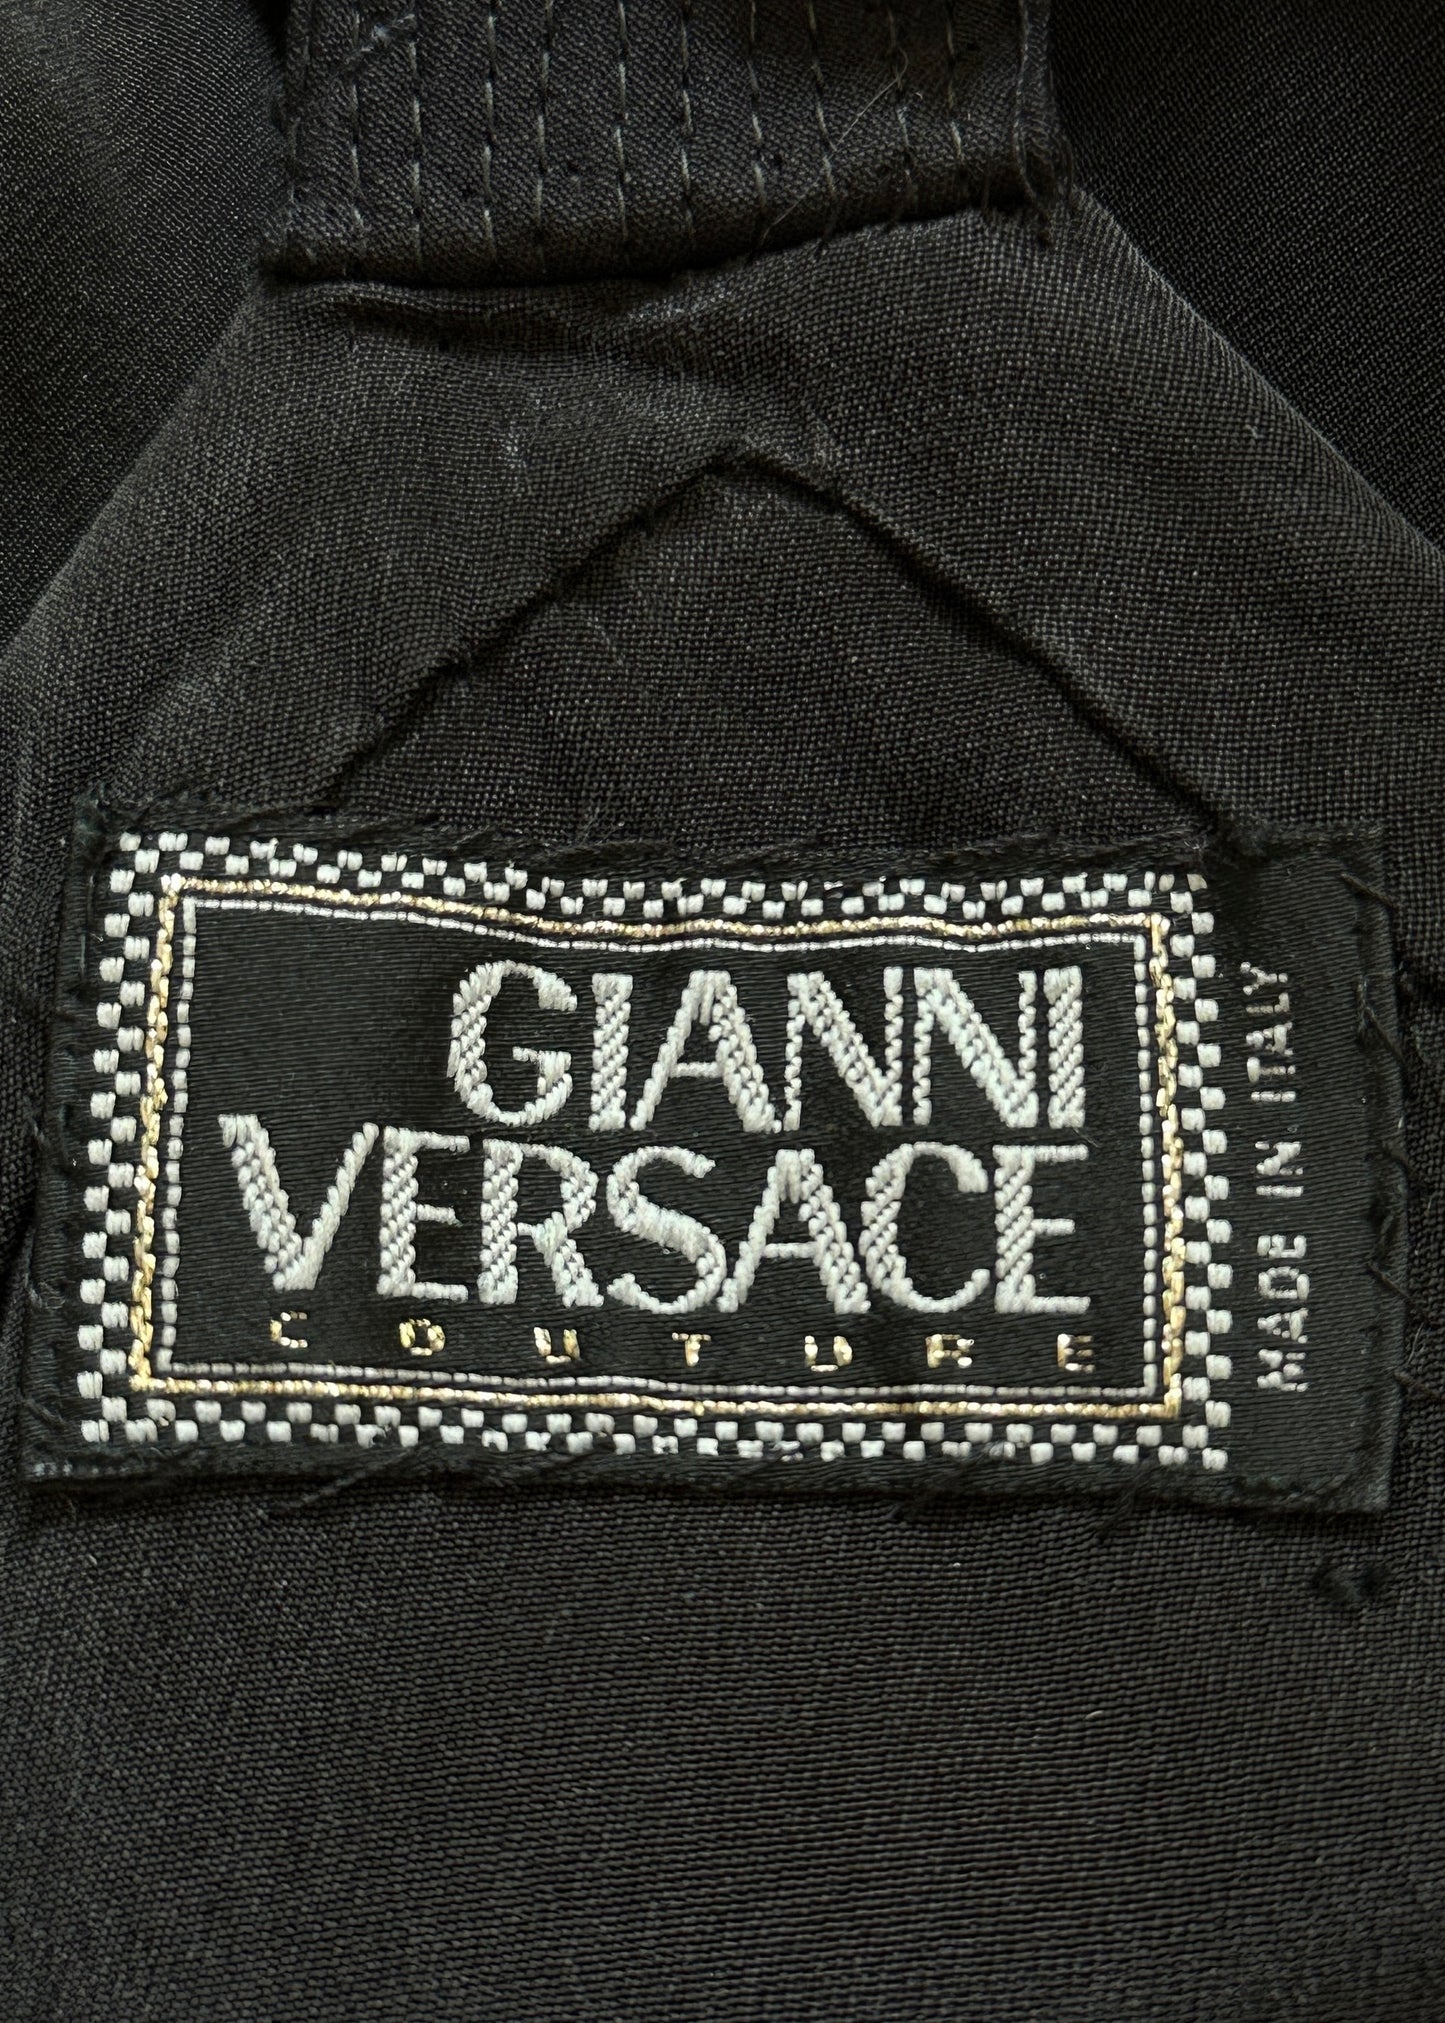 Versace Spring 1994 Medusa Strap Black Silk Gown Dress